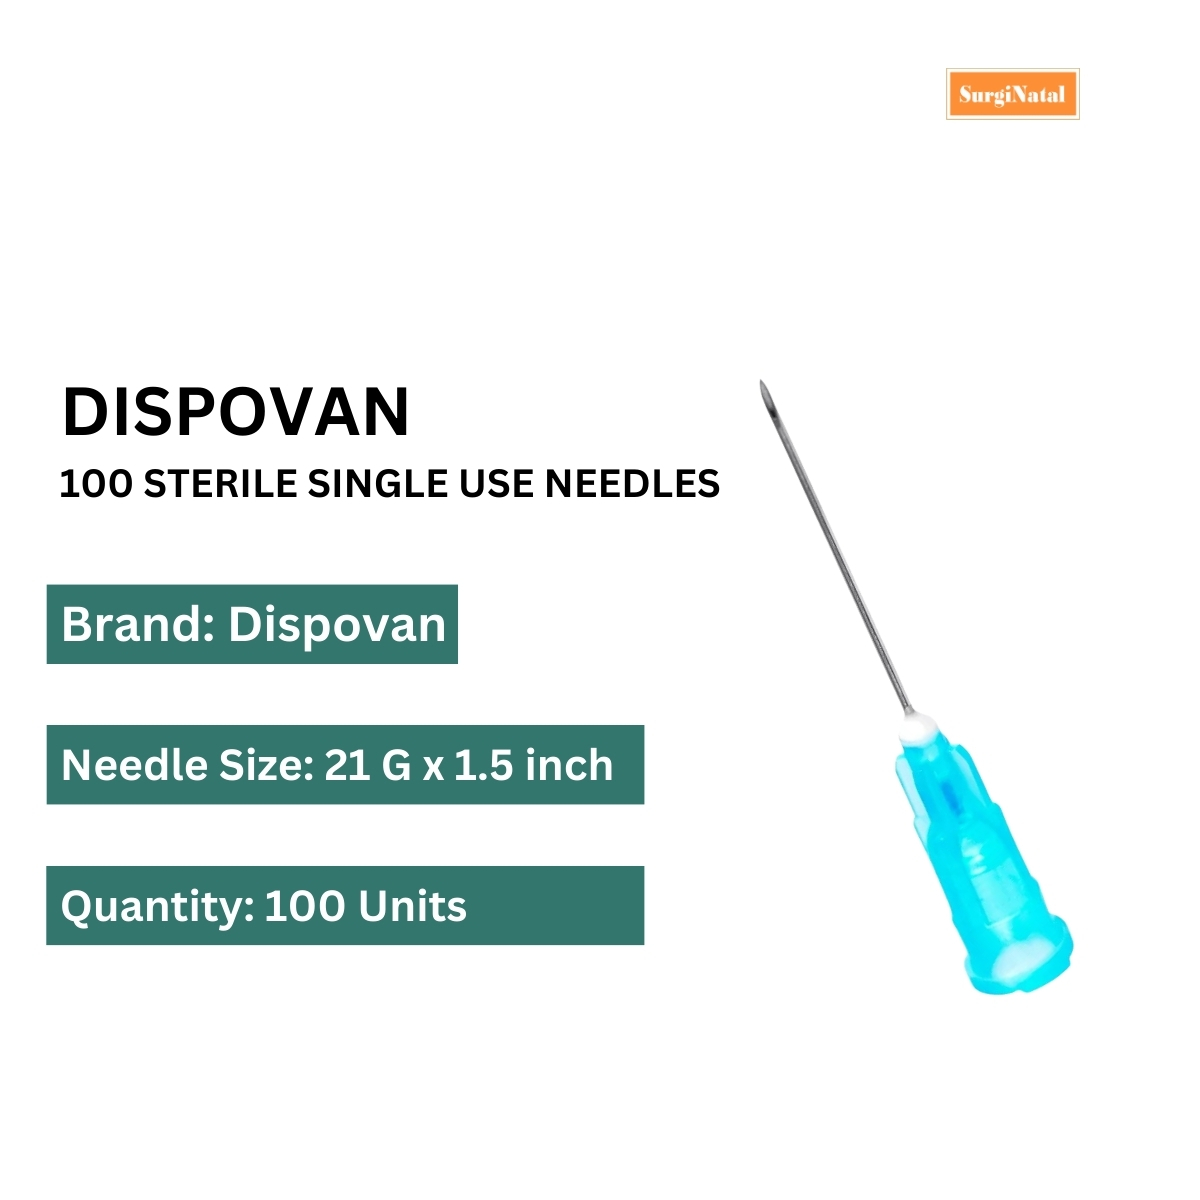 dispo van hypodermic needle - 21g*1.5 inch - 100 units pack